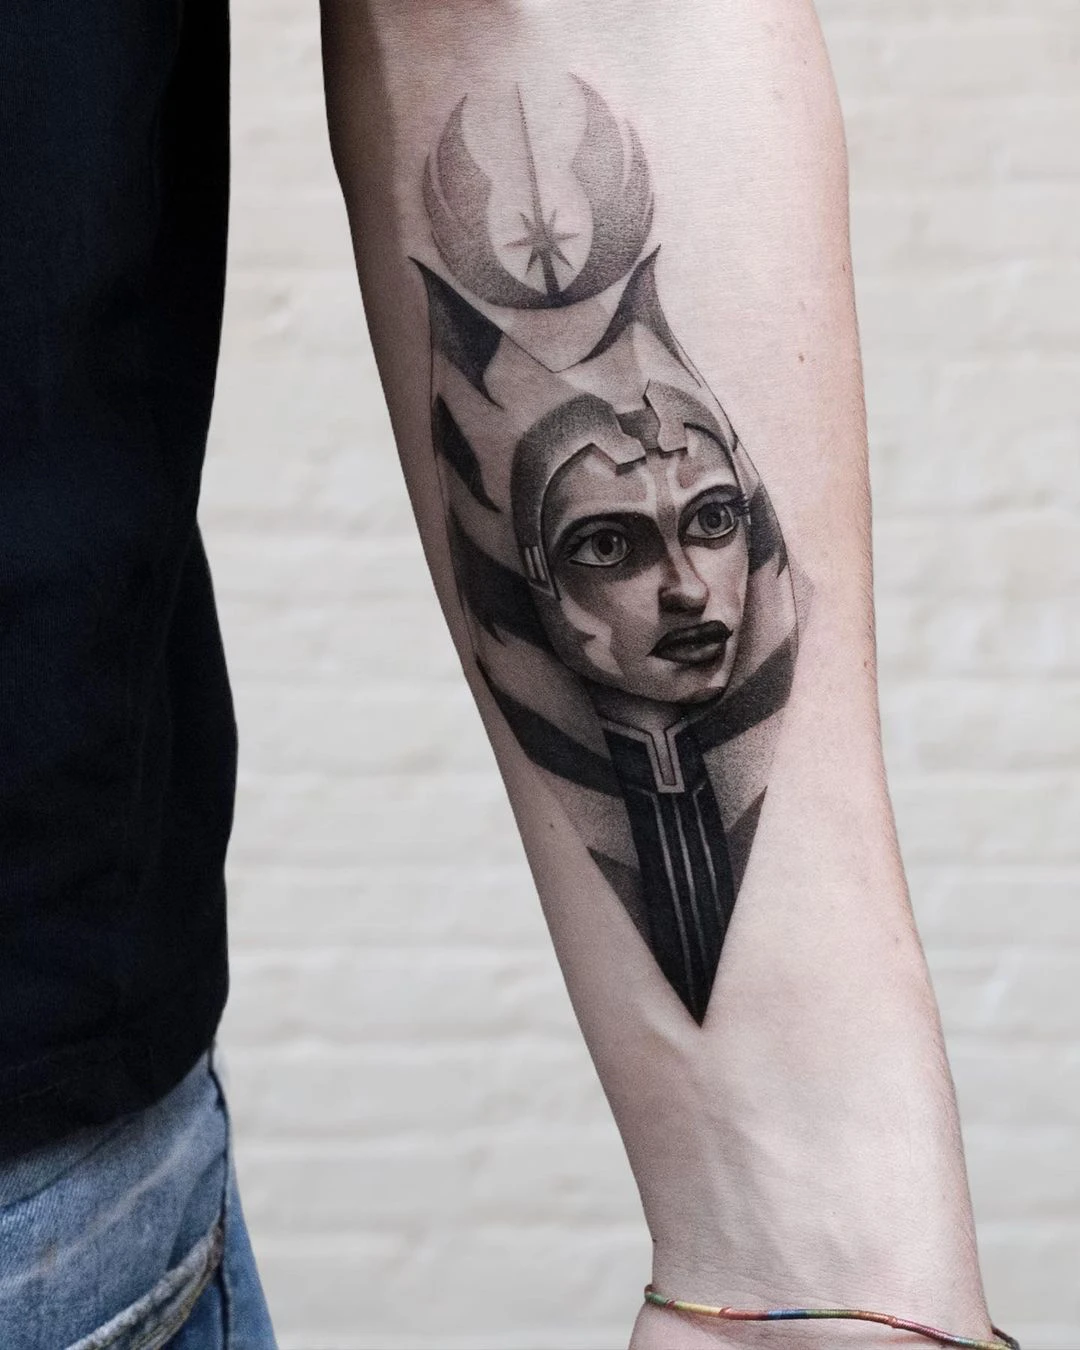 Ramón on Twitter Aj Pehowski gt Ahsoka Tano Star Wars tattoo ink  art httpstcoSx0ZNqV9E7  X